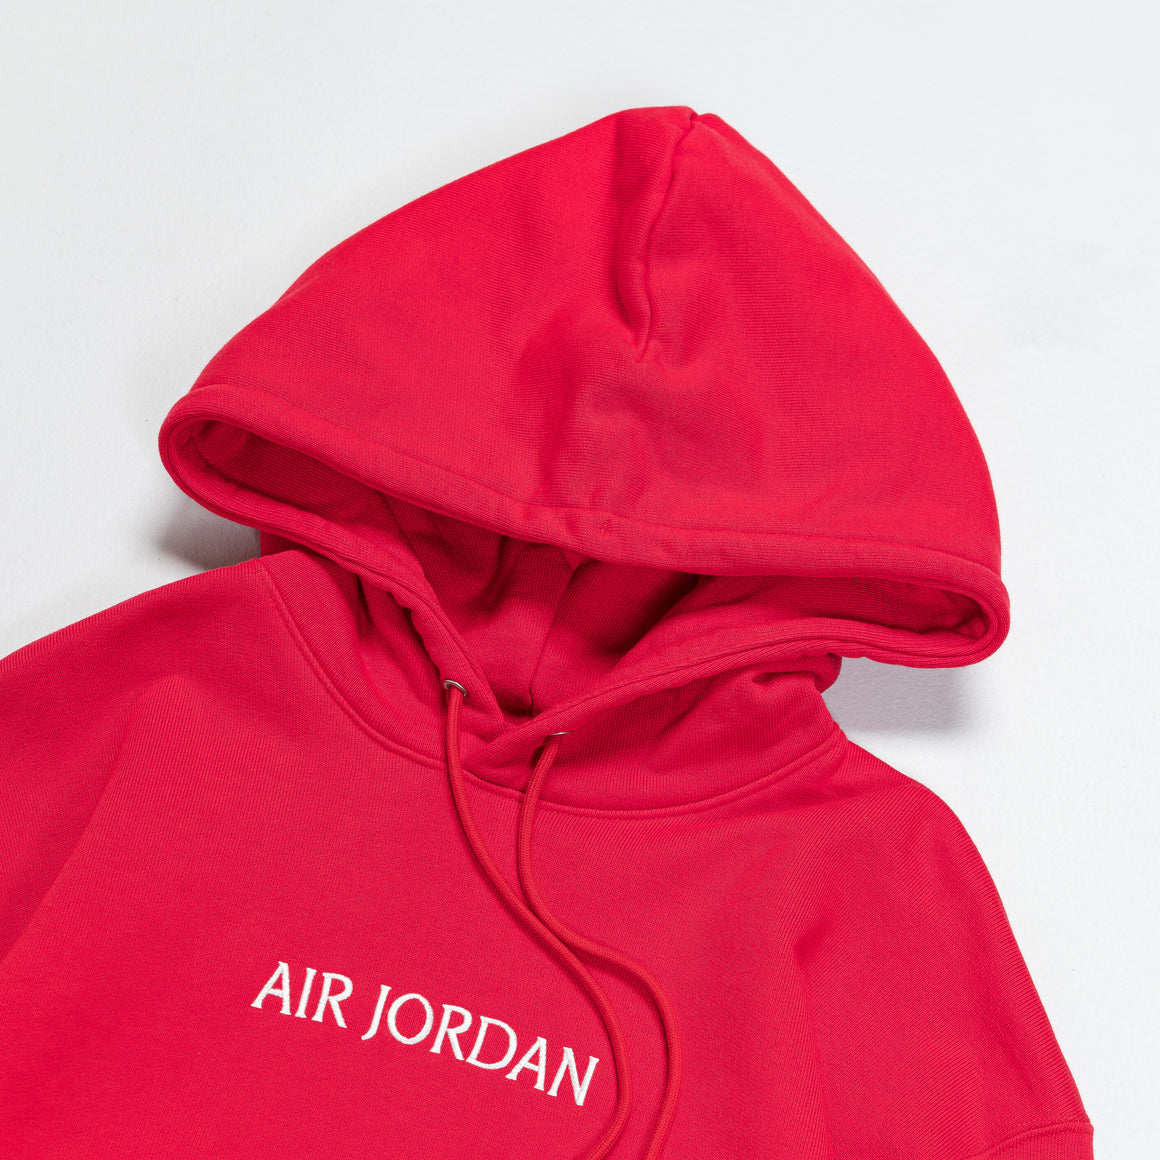 Jordan - Air Jordan SP Fleece Hoodie - Fire Red/Sail - UP THERE